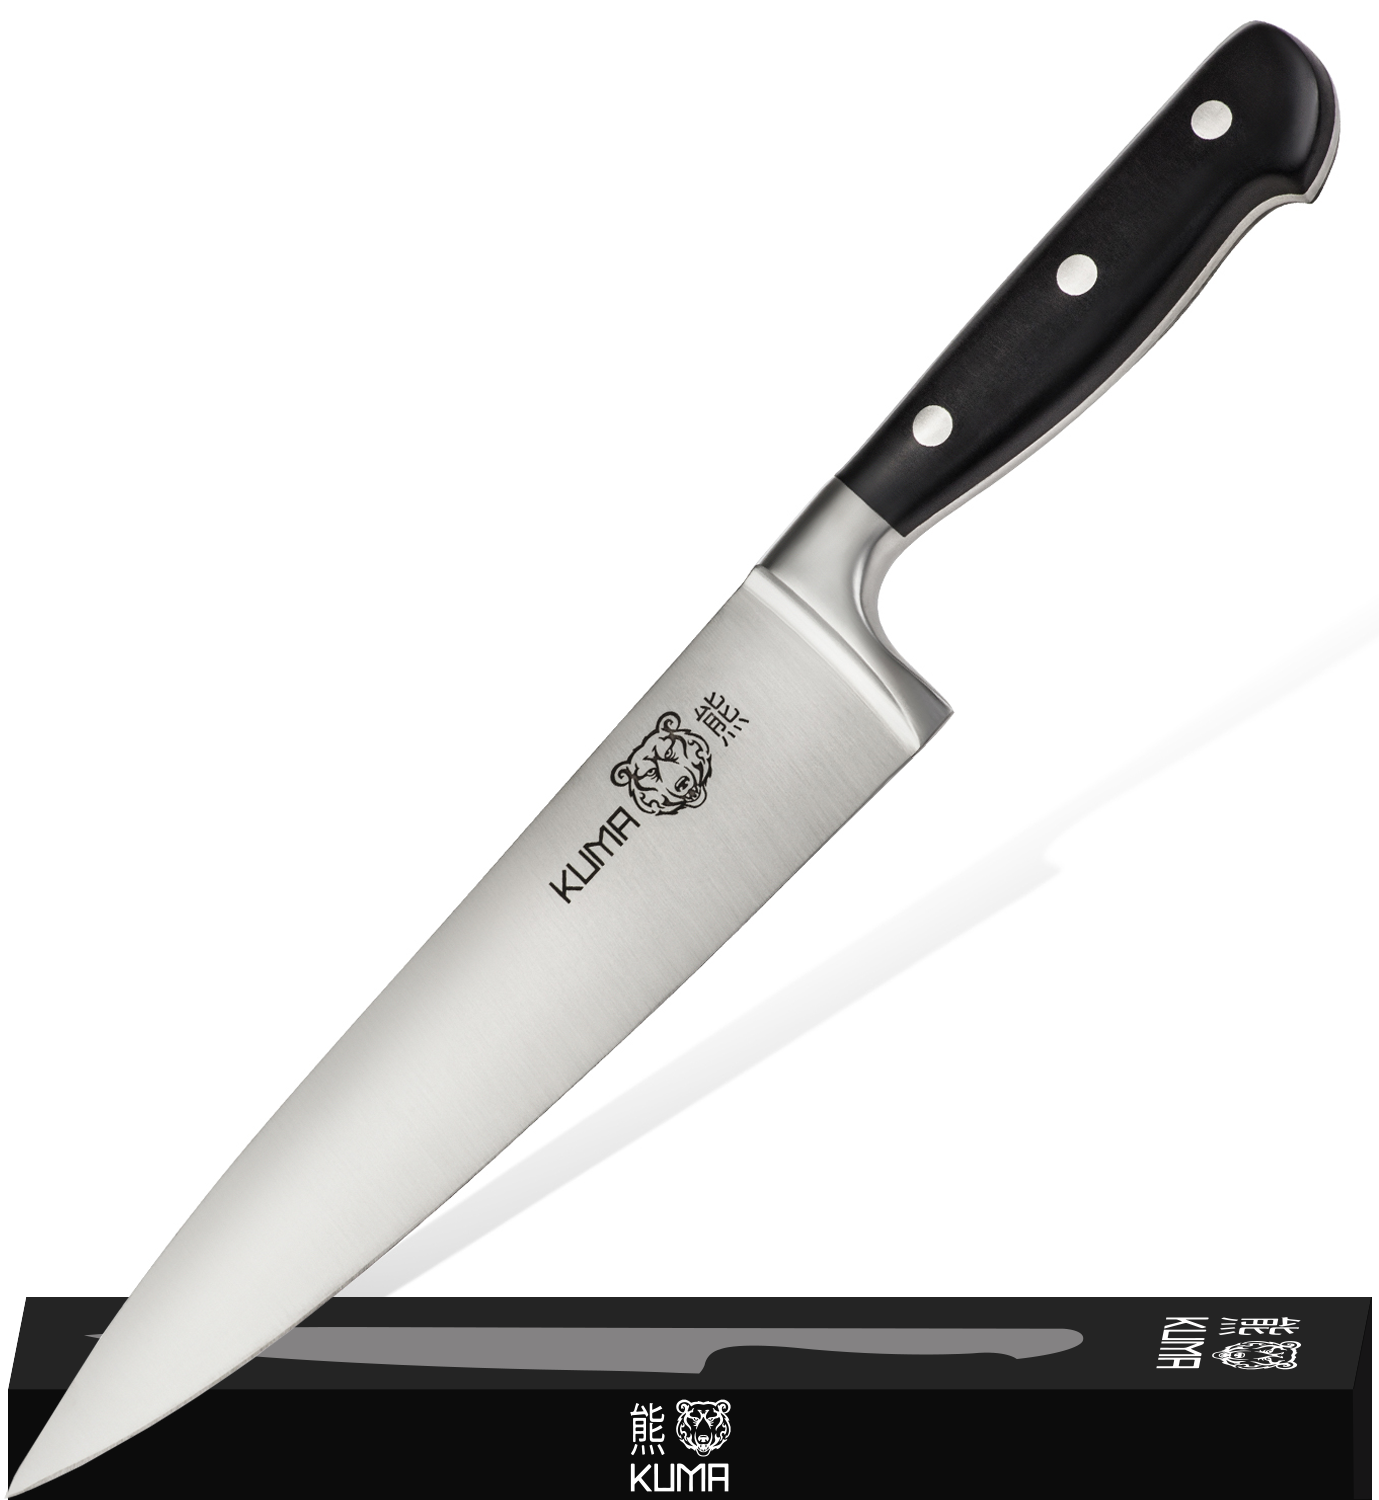 KUMA Multi-Purpose Chef's Knife 8" Classic - Razor Sharp Out The Box